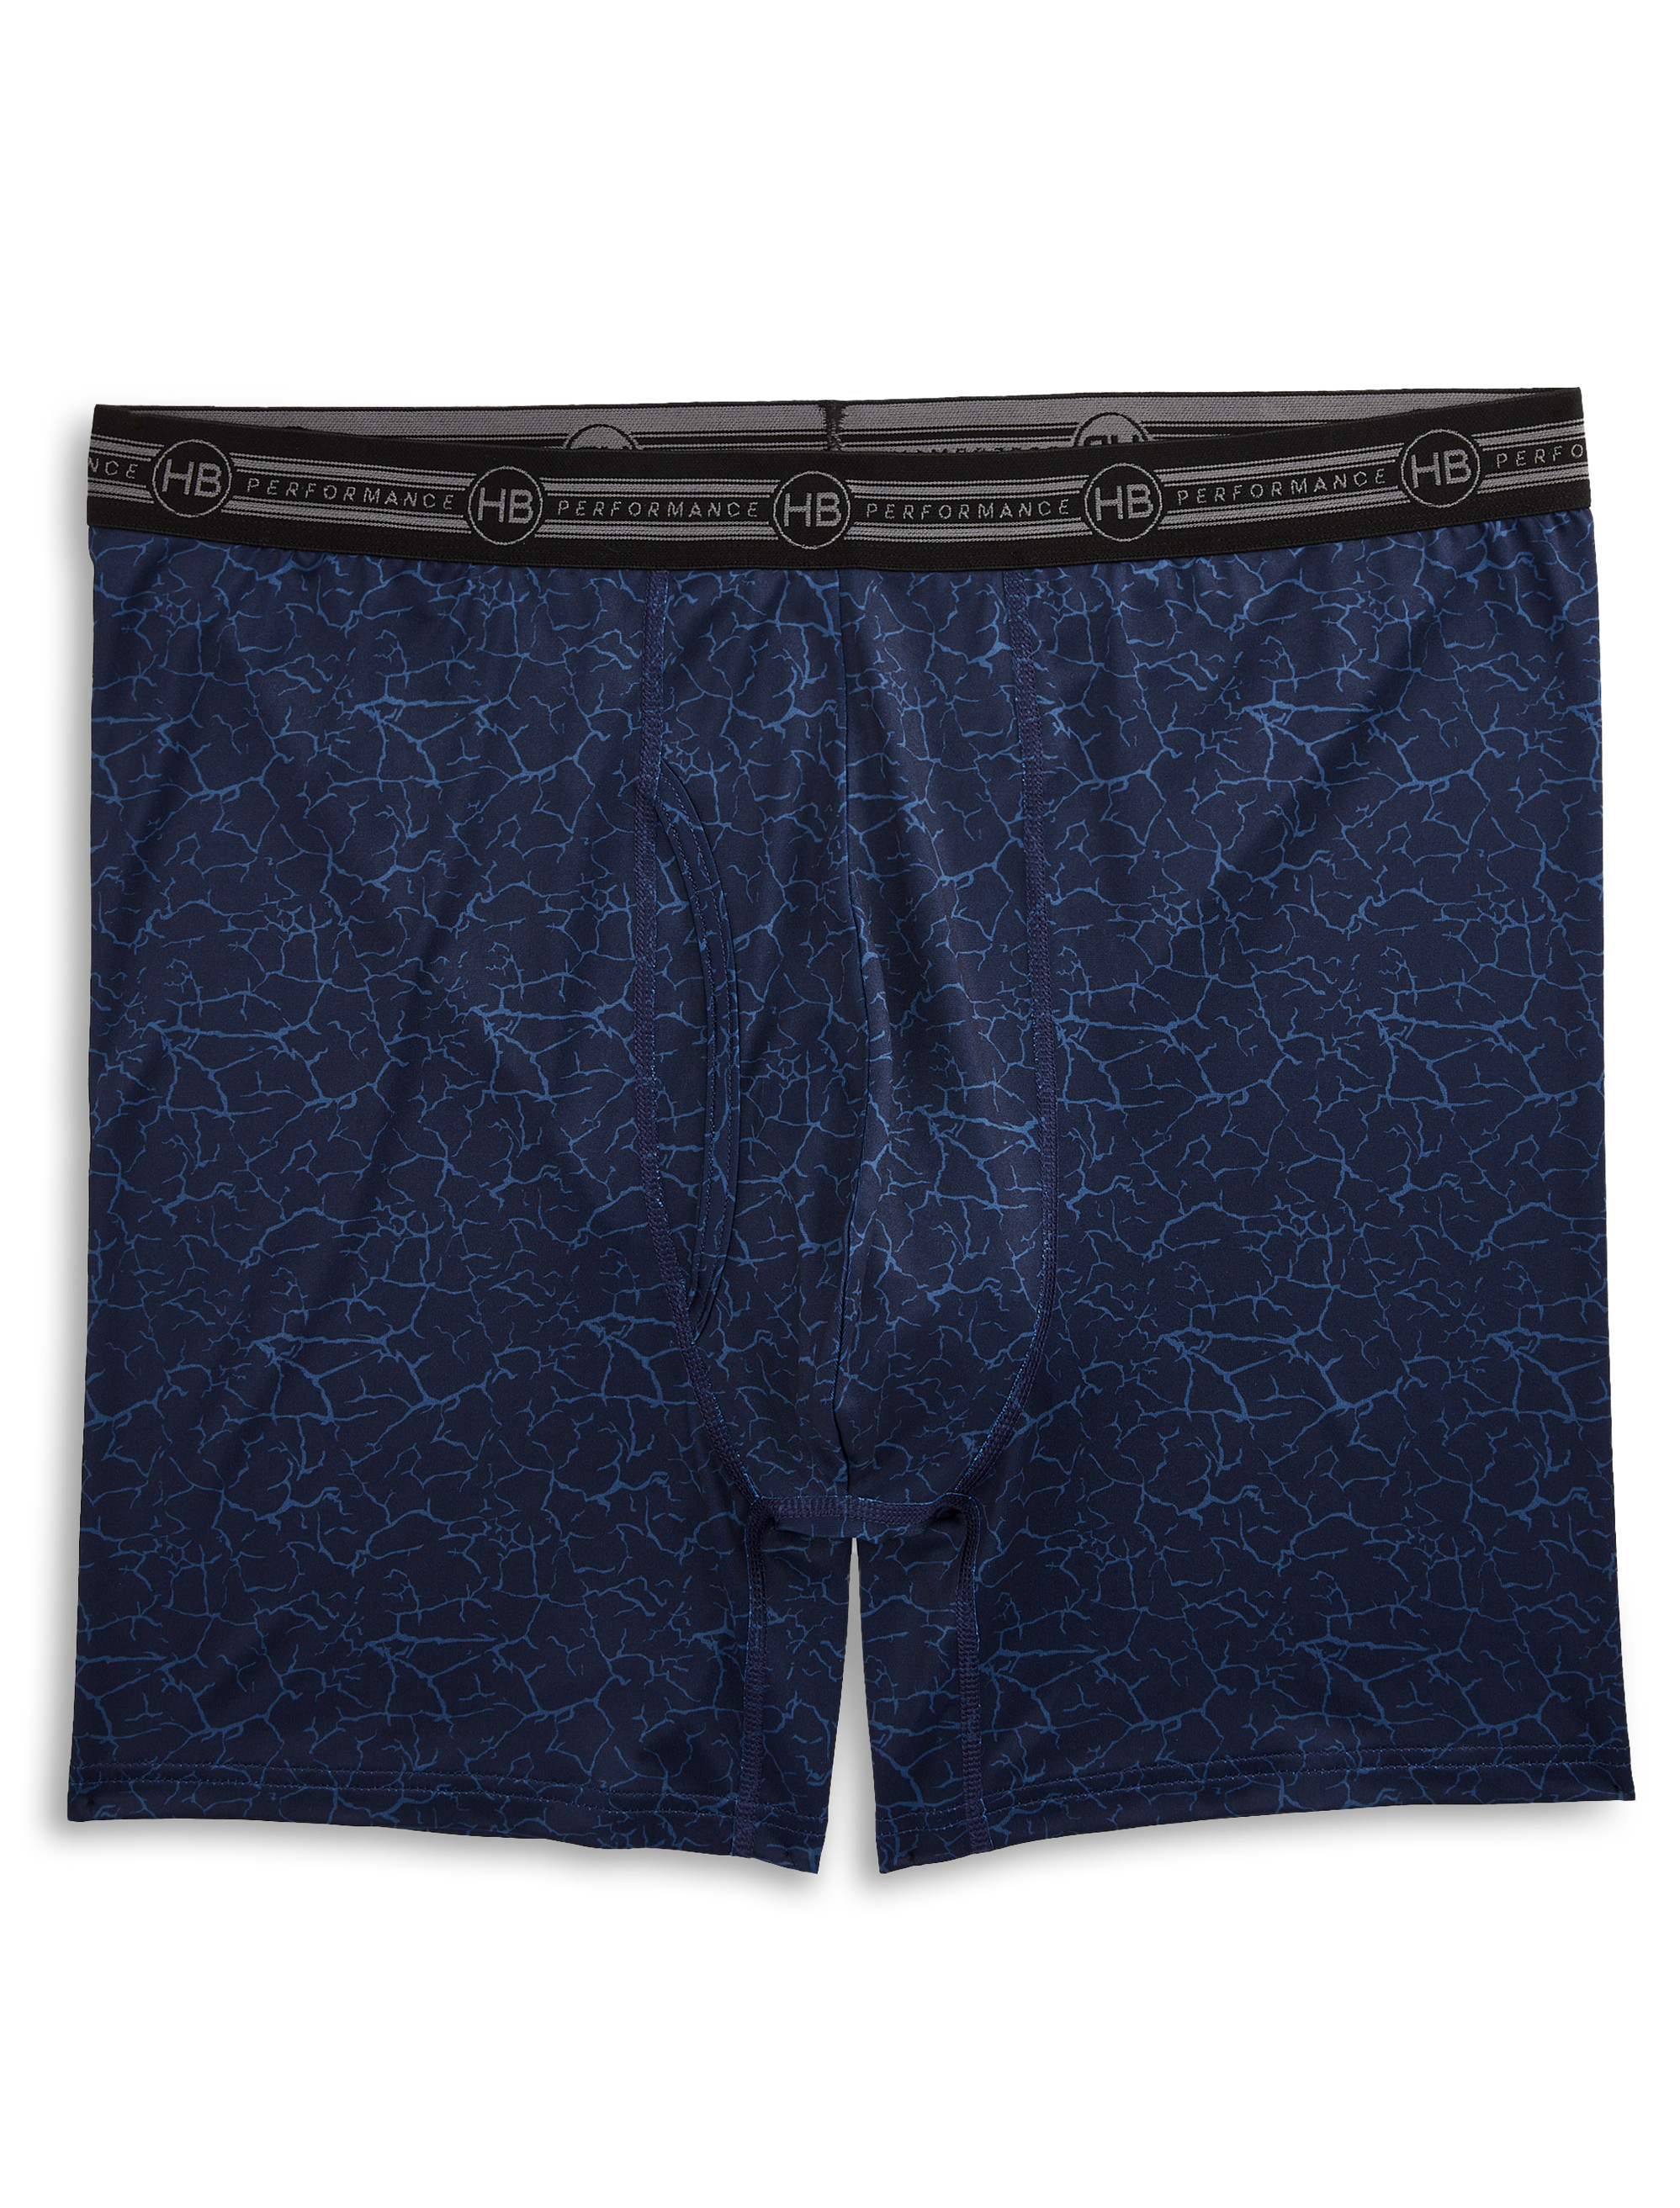 Underwear For Big & Tall Men  Boxers, Briefs & Undershirts Sized To 8XL